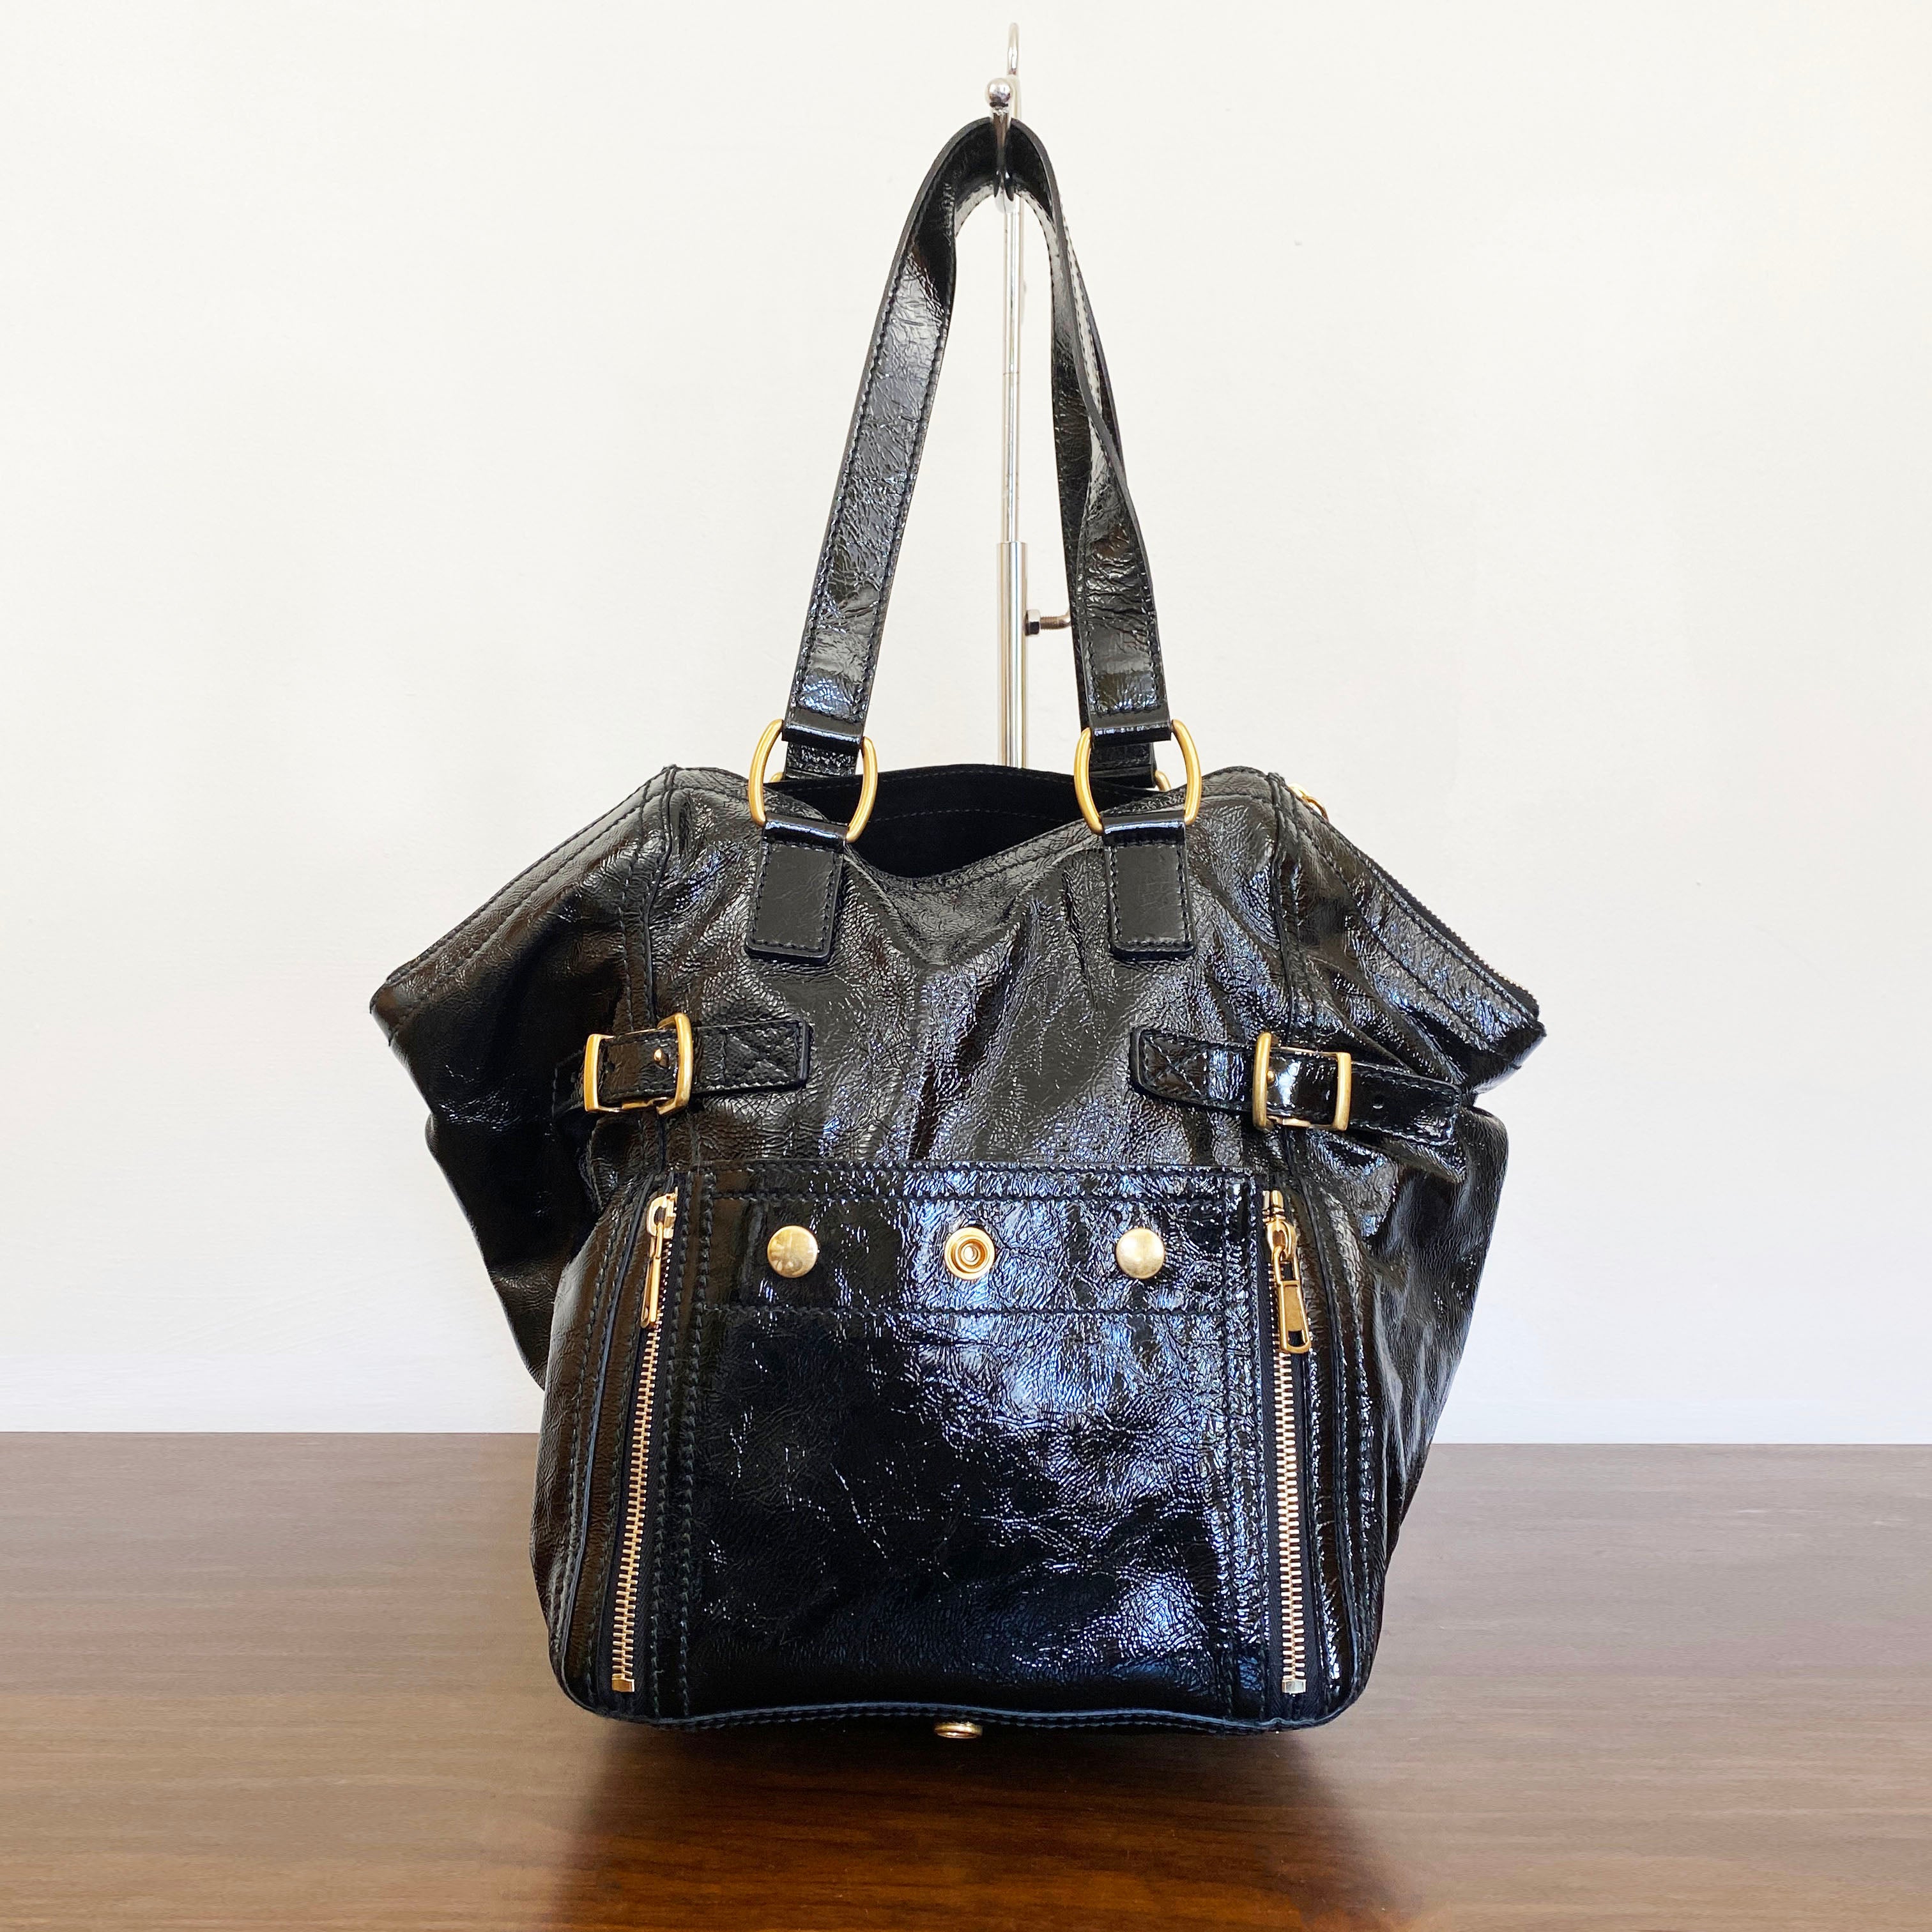 SAINT LAURENT Loulou medium quilted leather shoulder bag | Ysl bag black,  Fashion, Yves saint laurent bags